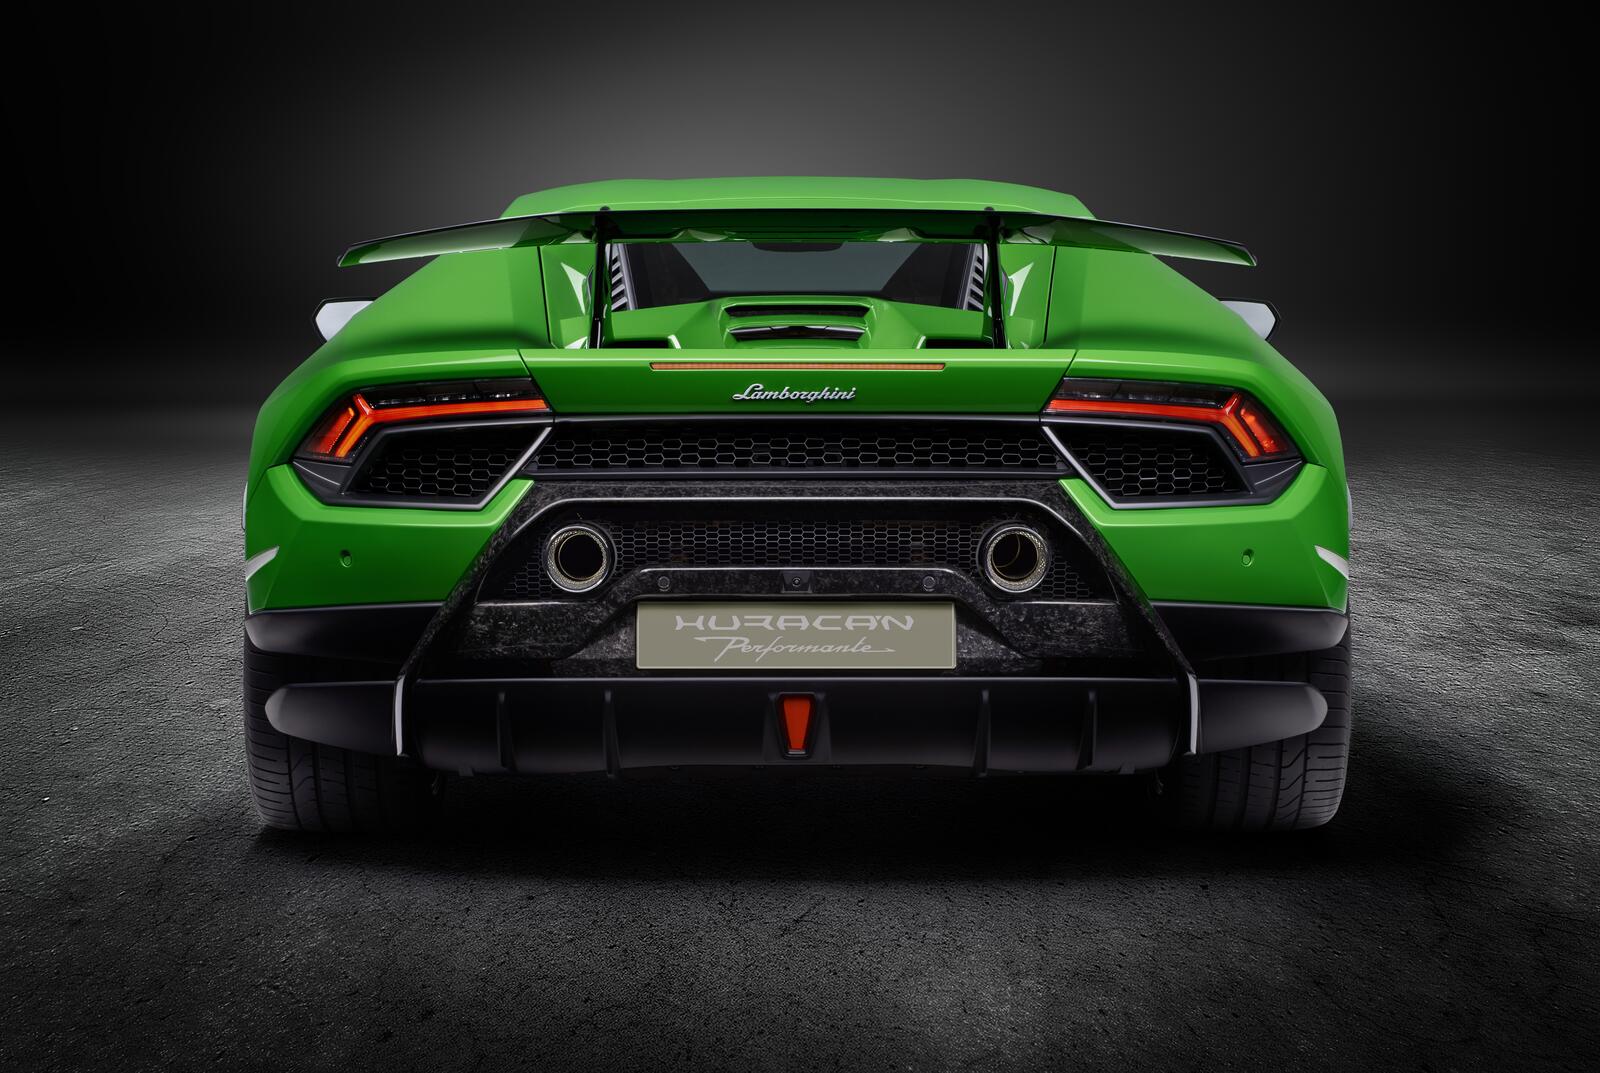 Wallpapers Lamborghini 2018 cars green car on the desktop